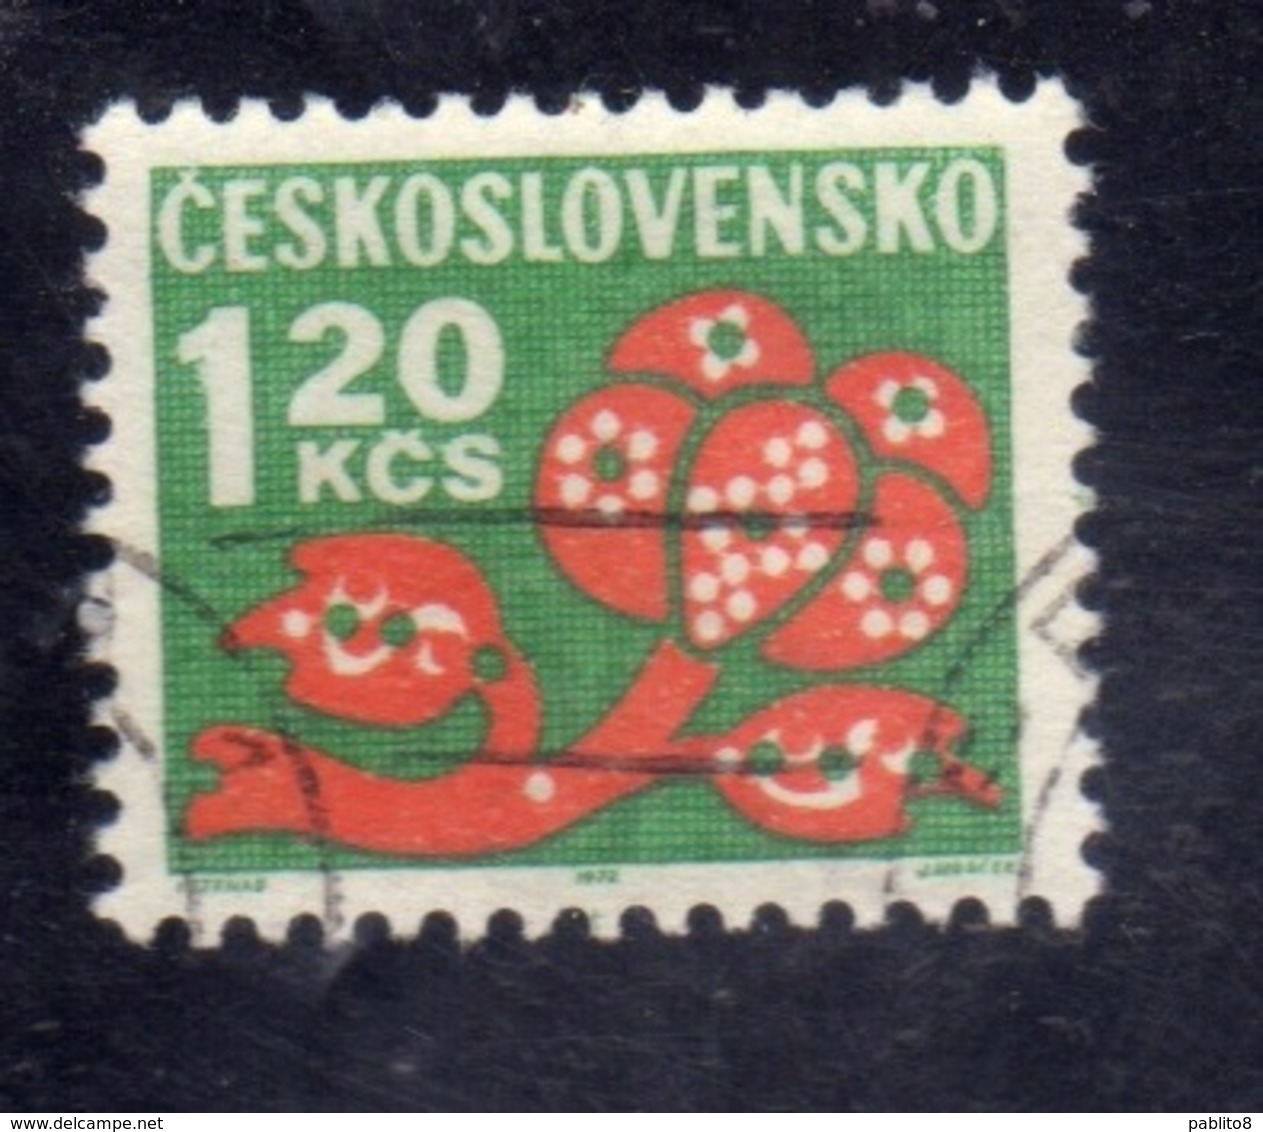 CZECHOSLOVAKIA CESKOSLOVENSKO CECOSLOVACCHIA 1971 1972 POSTAGE DUE STAMPS TASSE STYLIZED FLOWER1.20k USED USATO OBLITERE - Postage Due